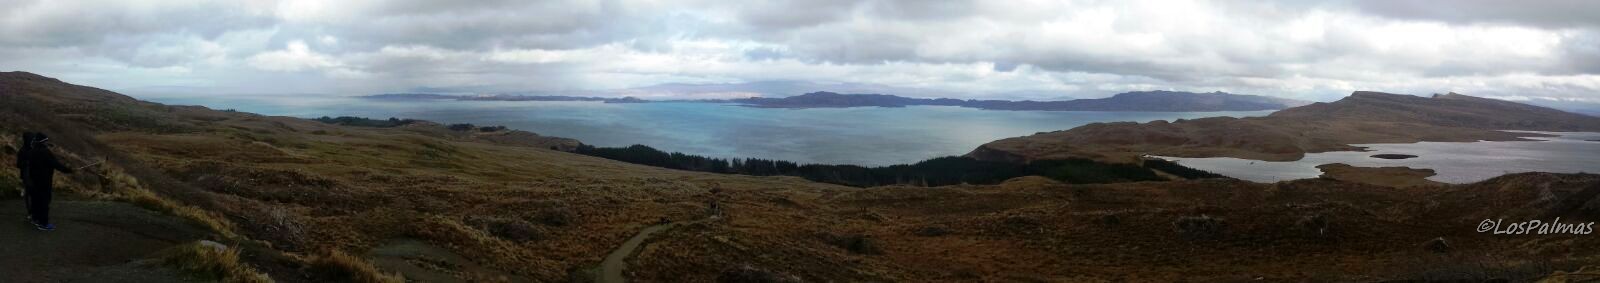 Vista panorámica Isla de Skye subiendo a Old Man of Storr